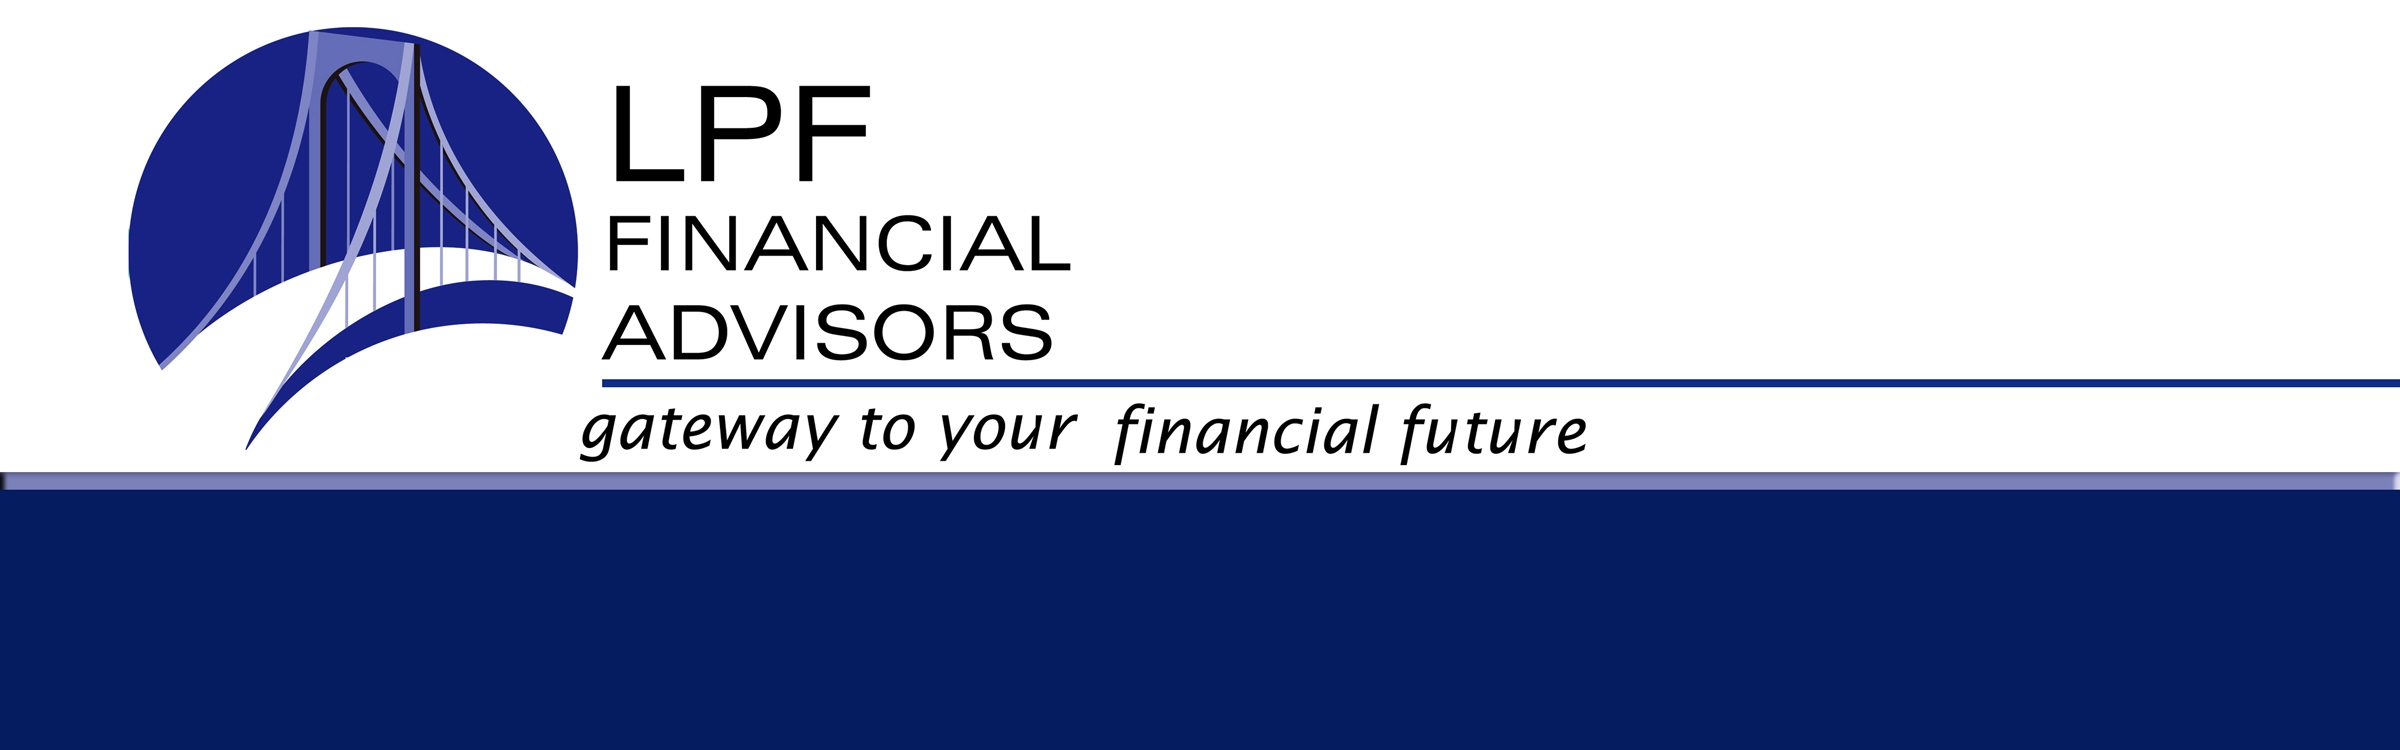 LPF Financial Advisors